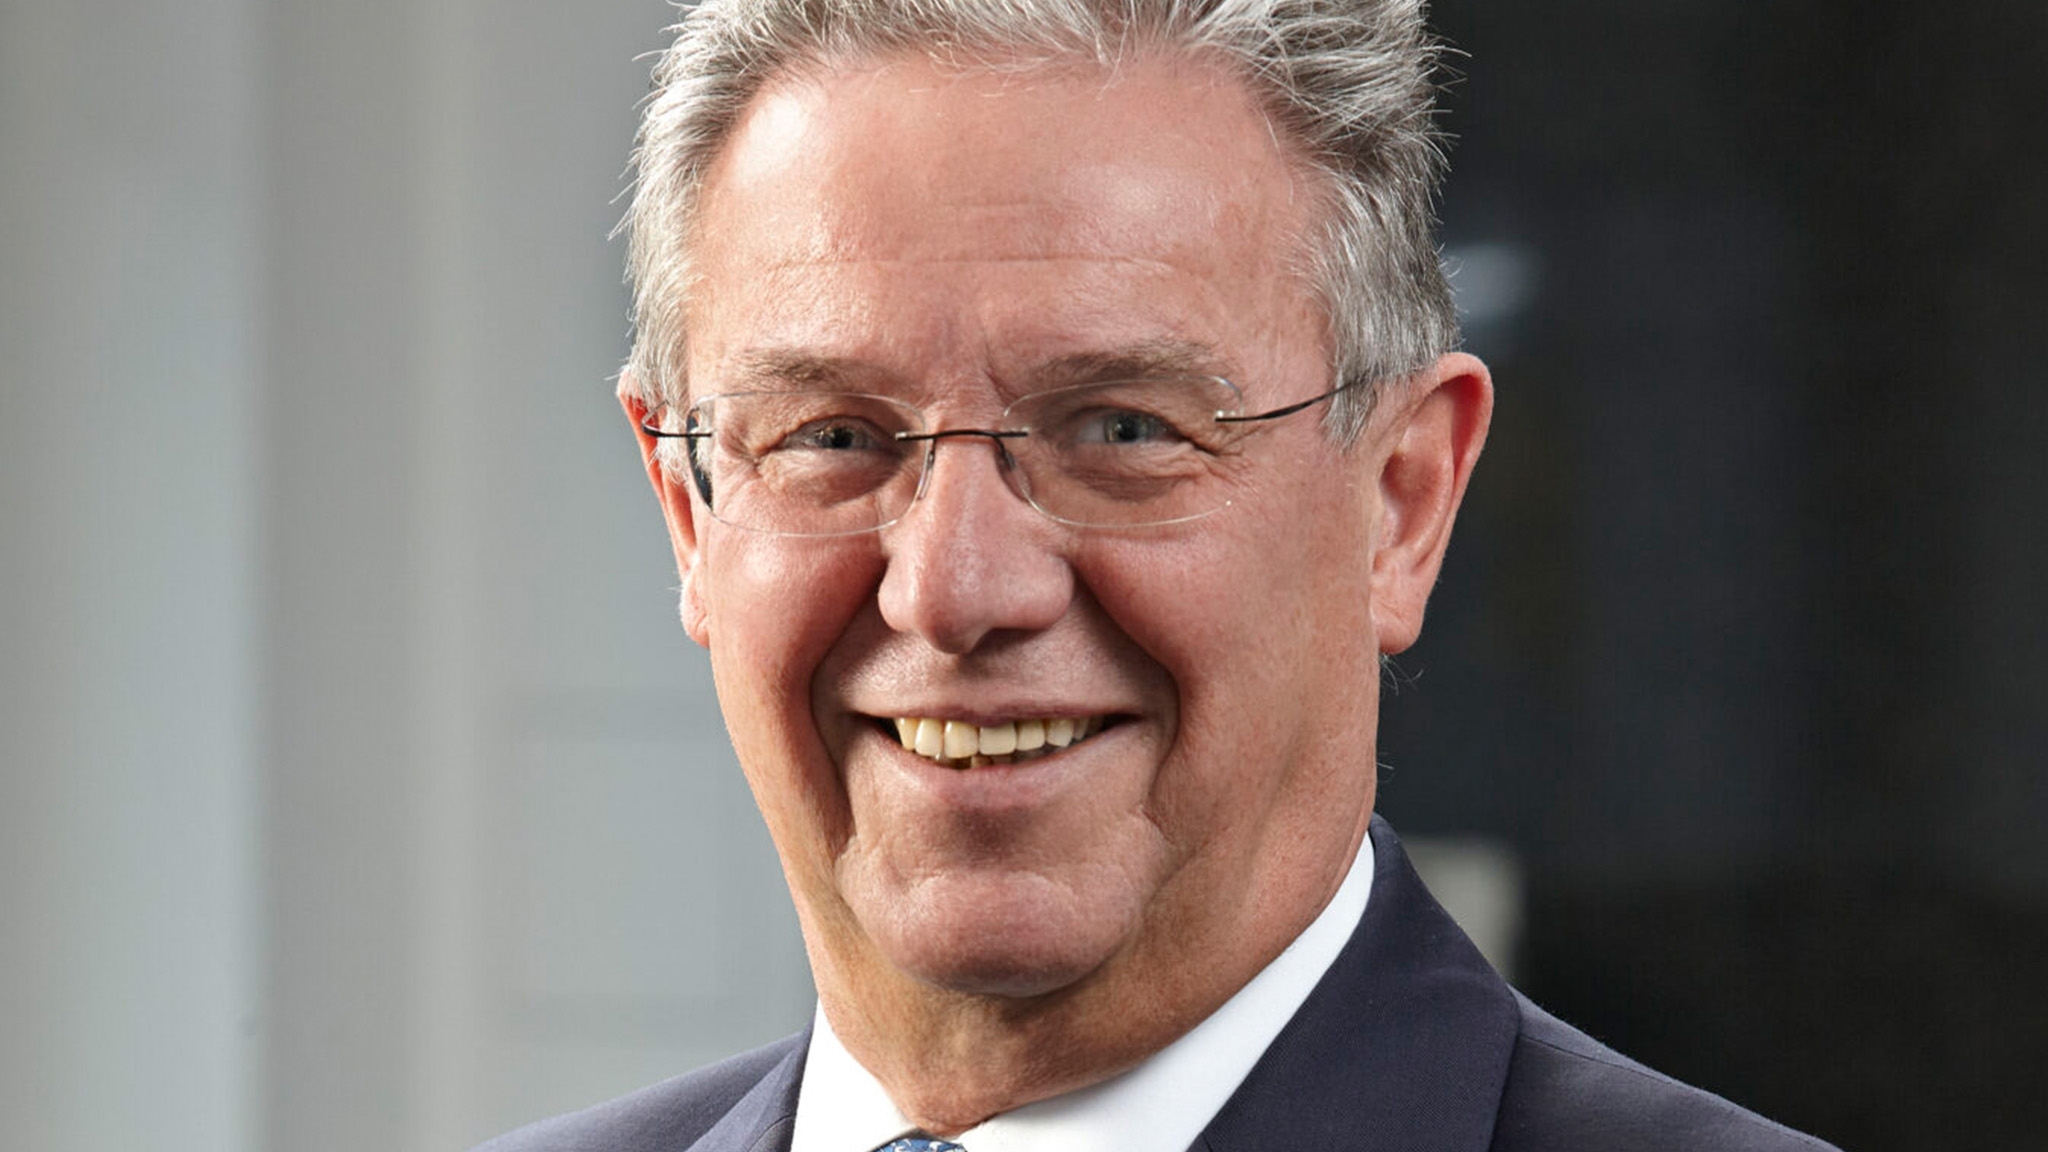 ZAW-Präsident Andreas F. Schubert – 